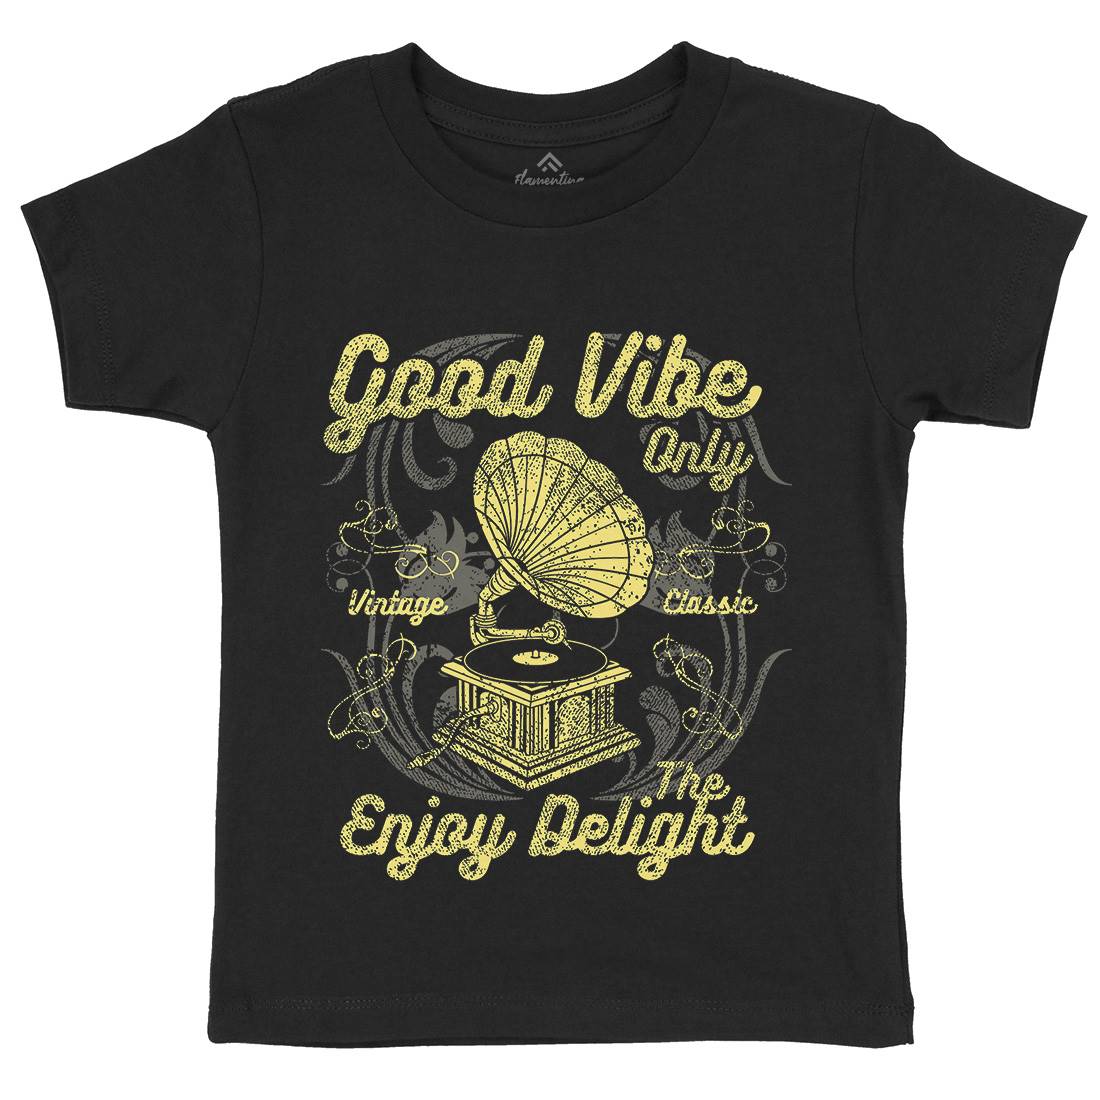 Good Vibe Only Kids Organic Crew Neck T-Shirt Music A059